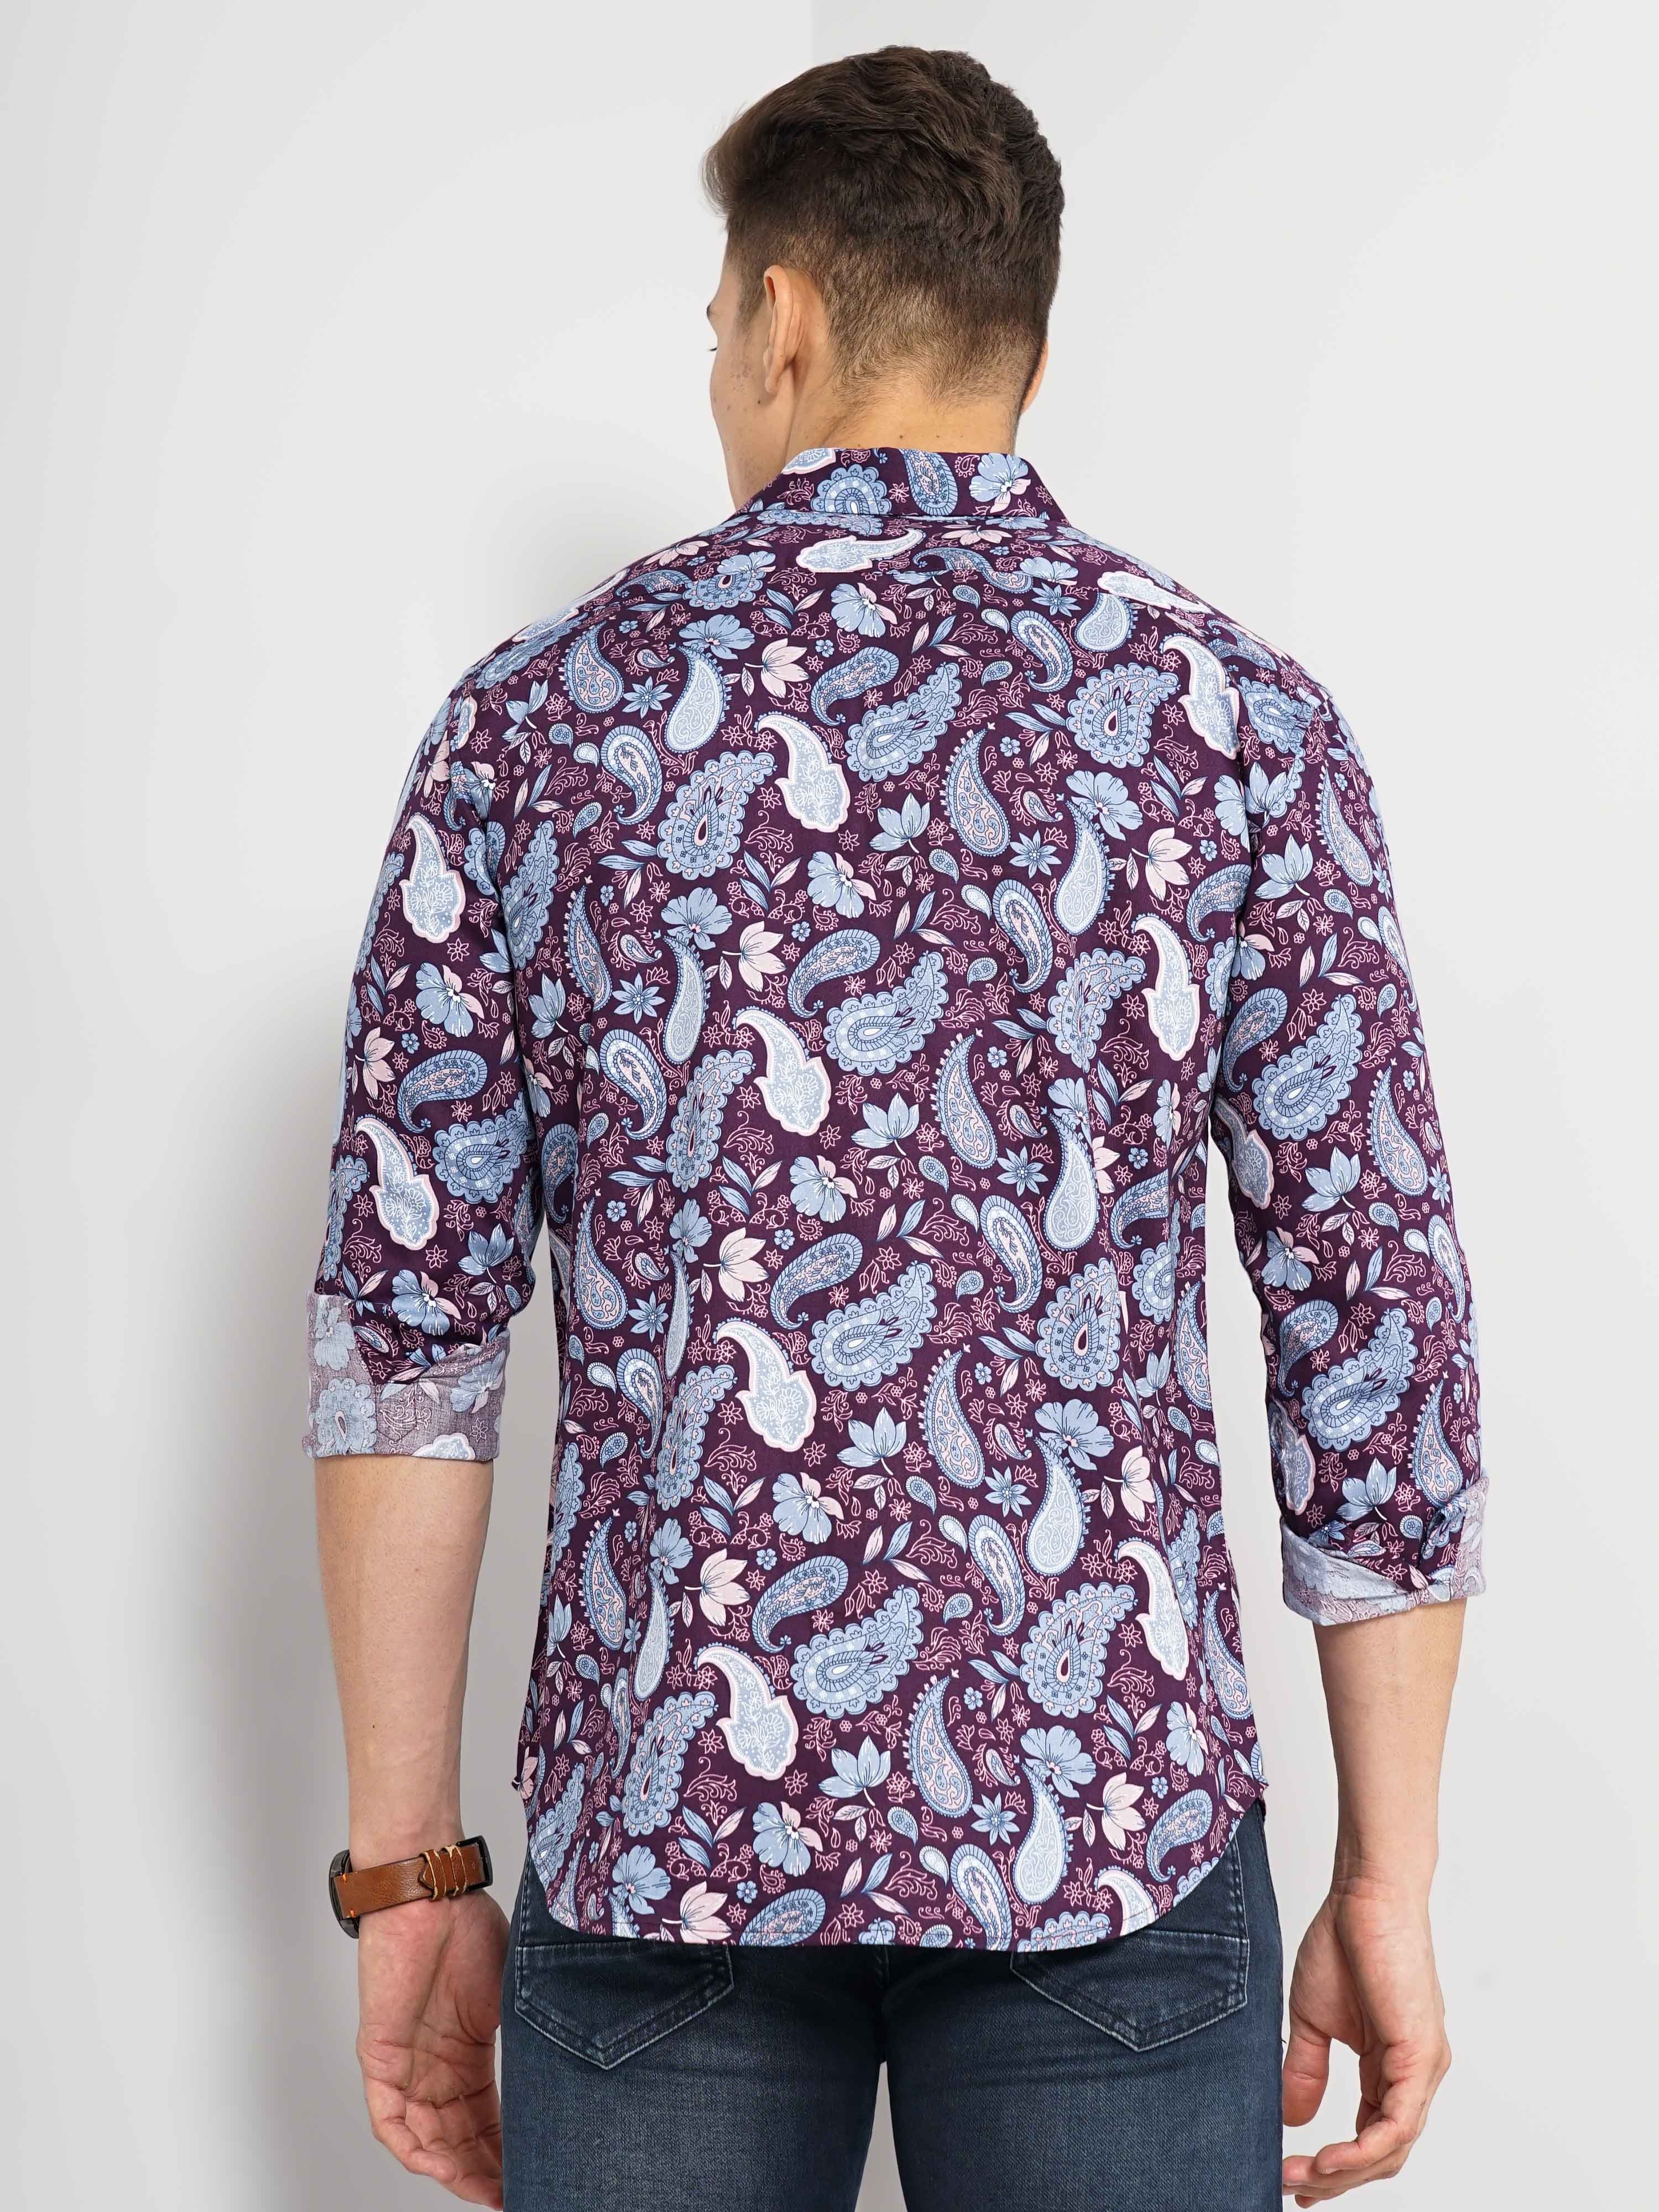 Men's Purple Printed Casual Shirts